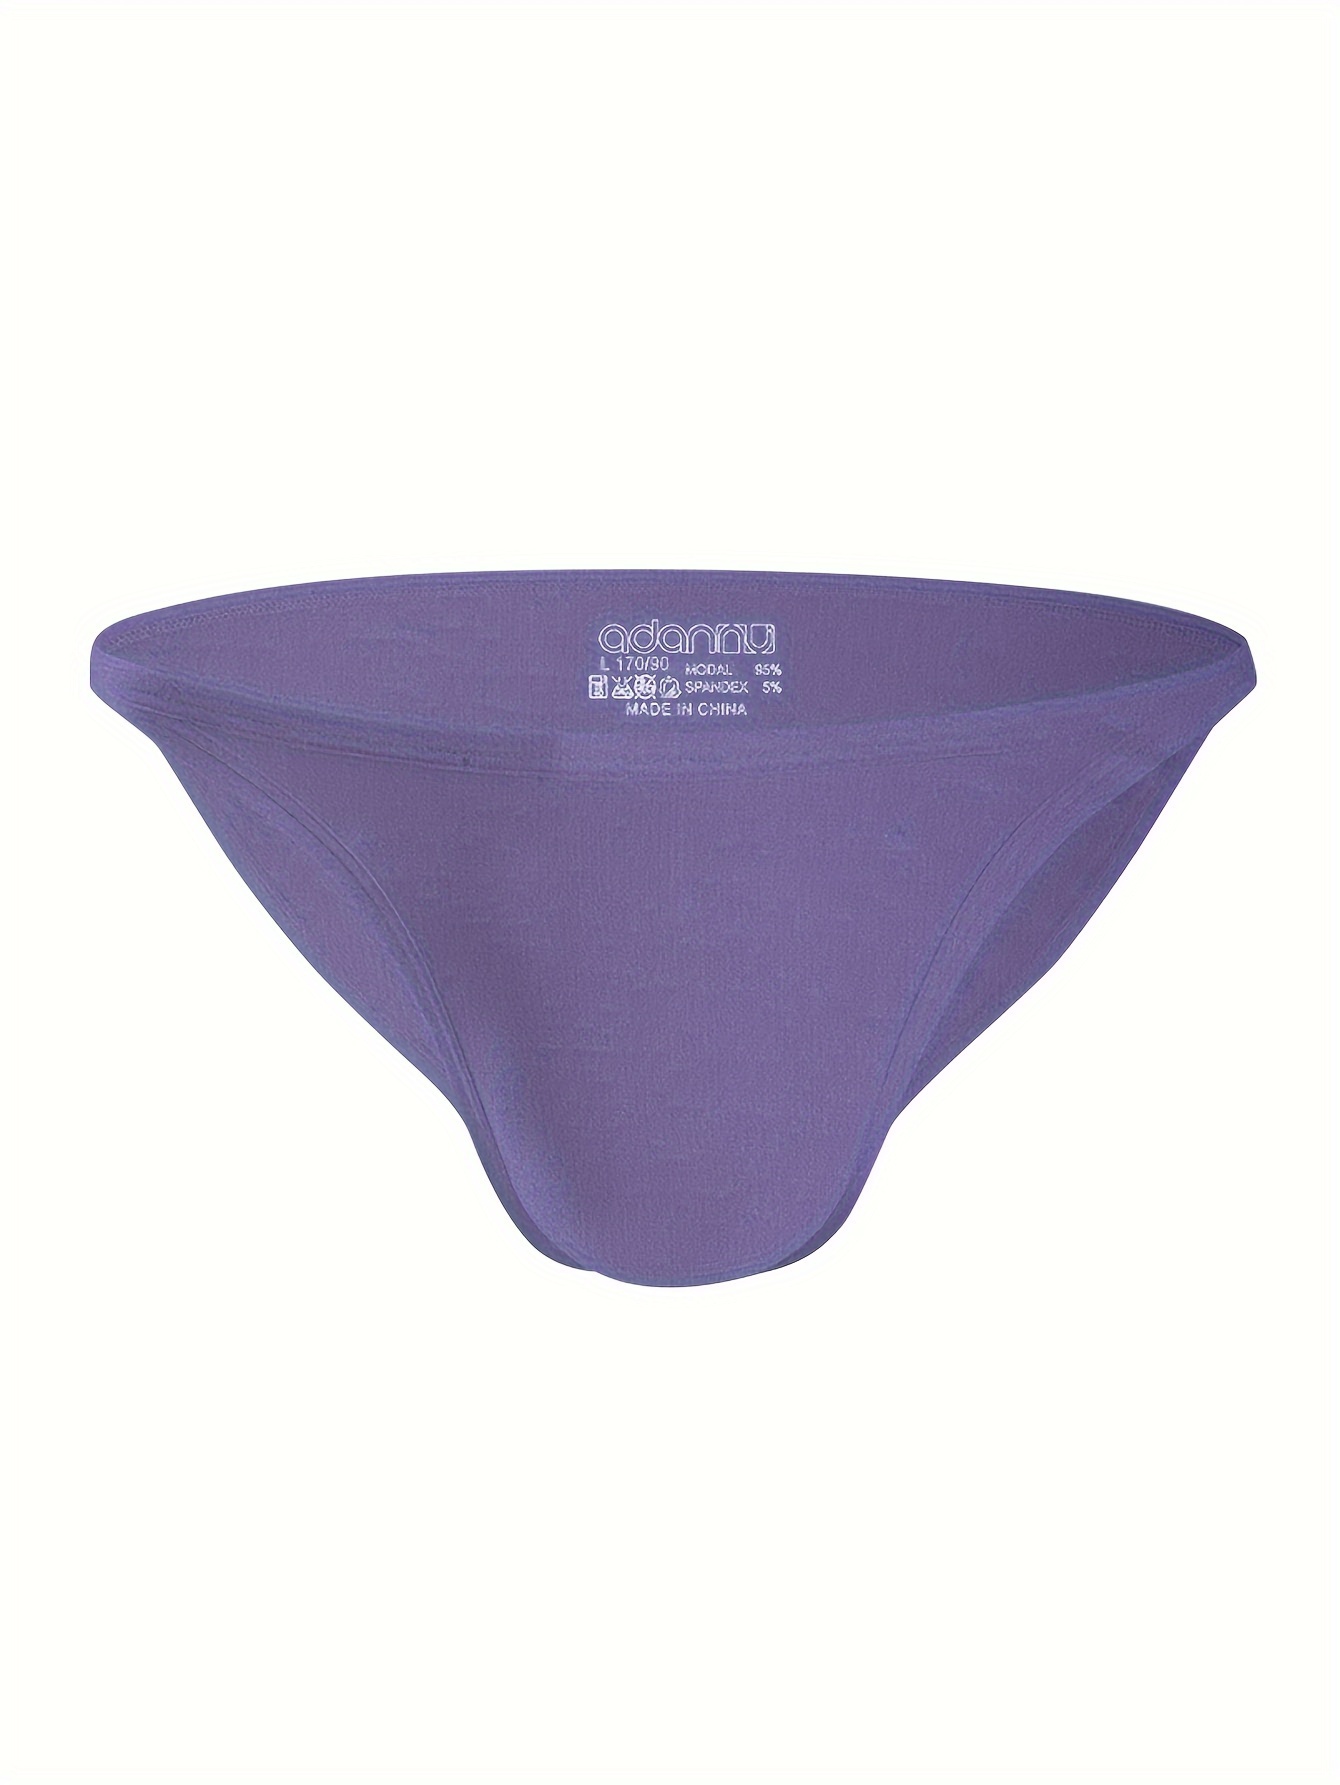 Black Sexy Panties Men Semi Sheer Underwear Lingerie - Milanoo.com